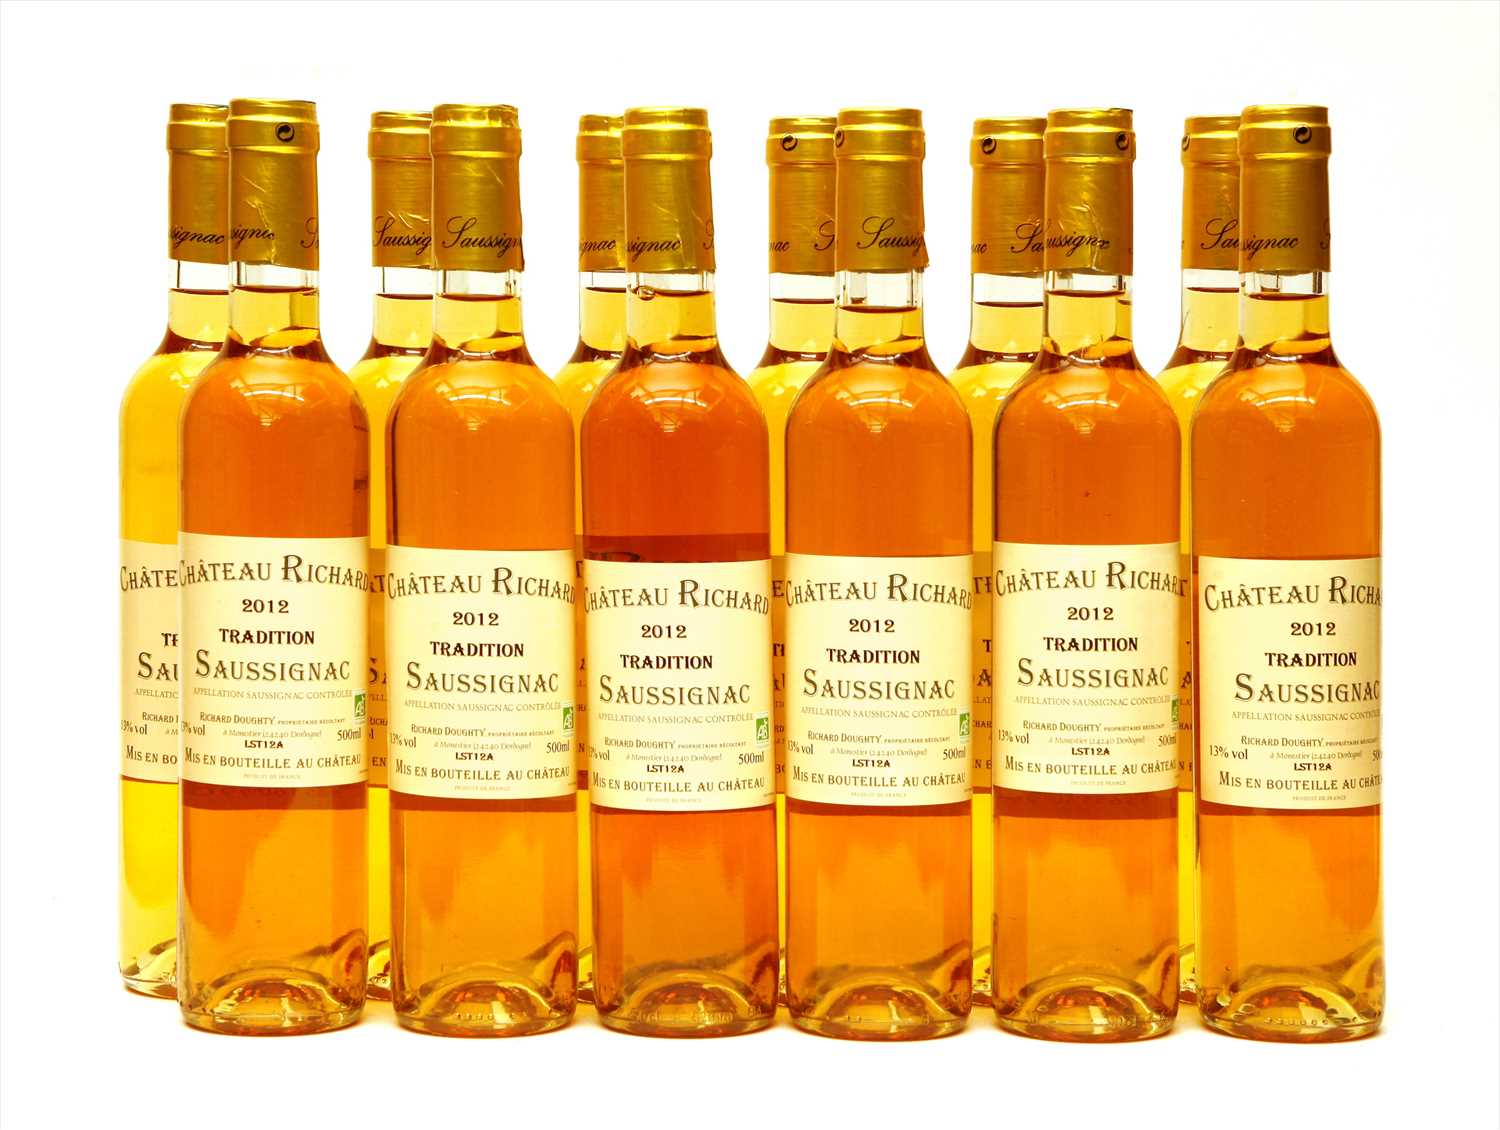 Lot 18 - Château Richard, Saussignac, Tradition, 2012, twelve half bottles (two boxes of six)